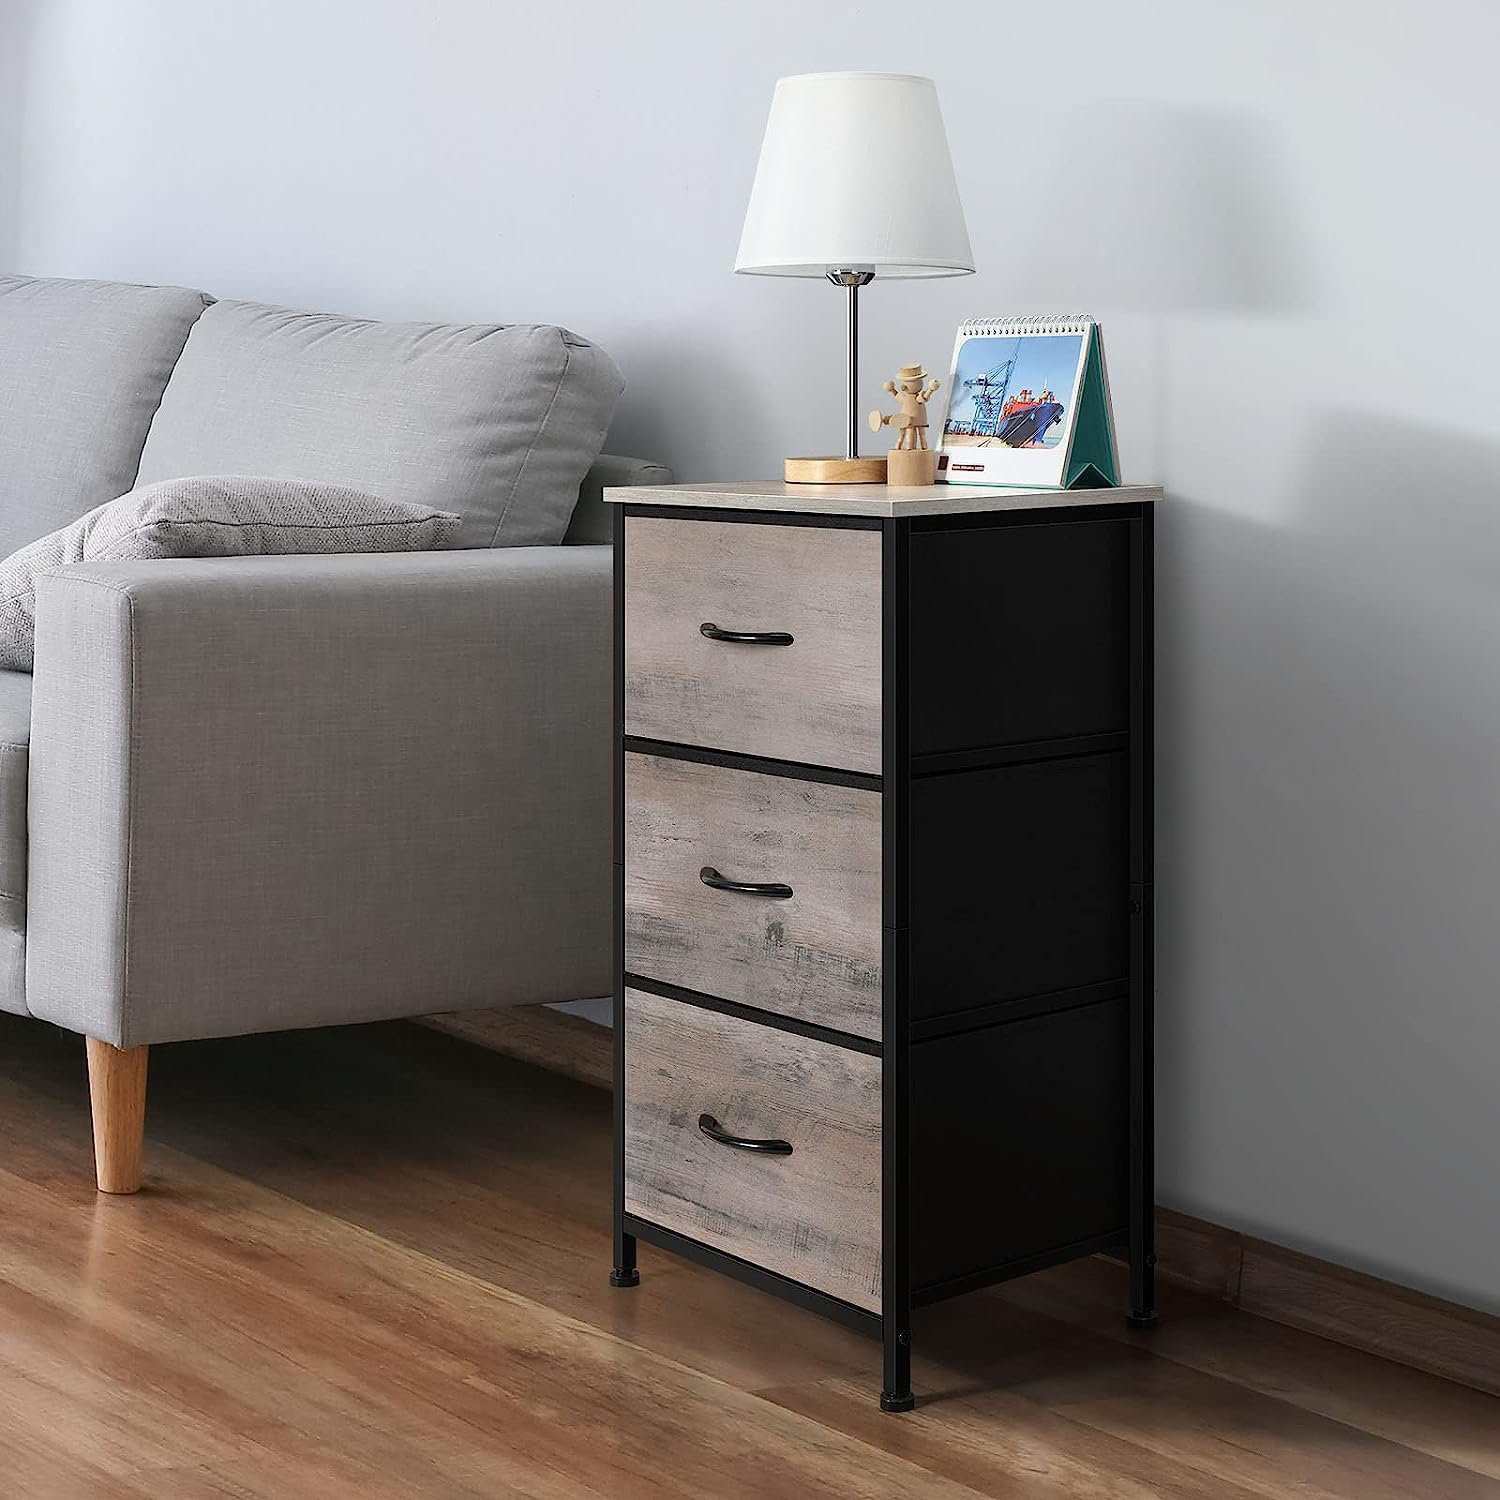 Ojaswi 5-Drawer Dresser,Chest of drawers,Bedroom dresser